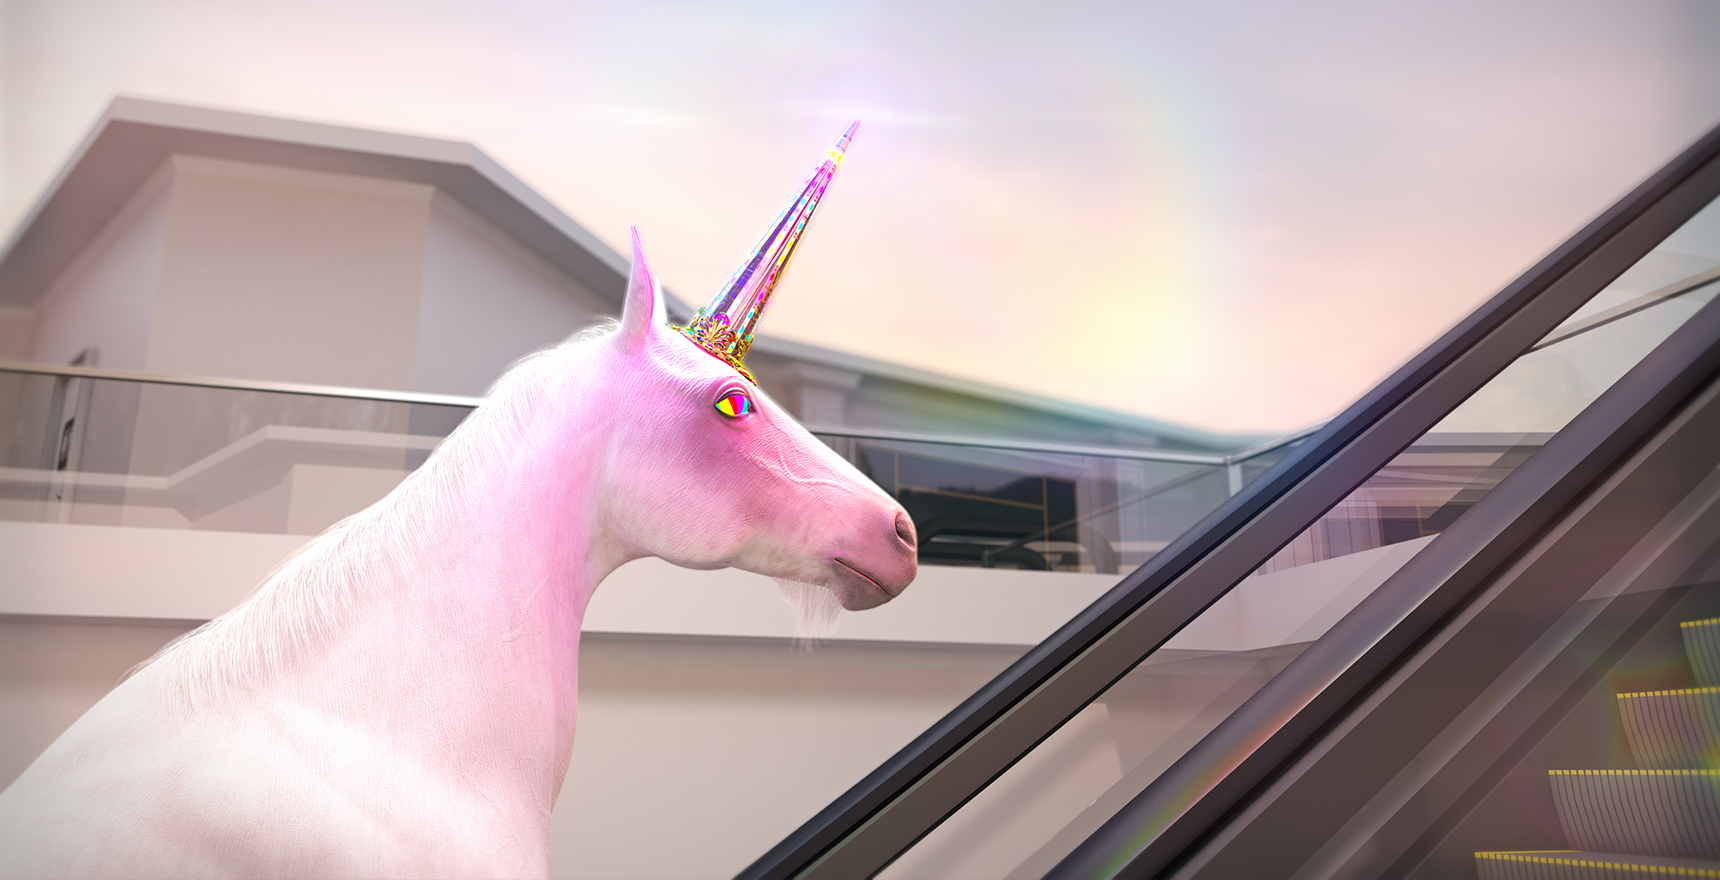 Pink unicorn on escalator photo realistic art work